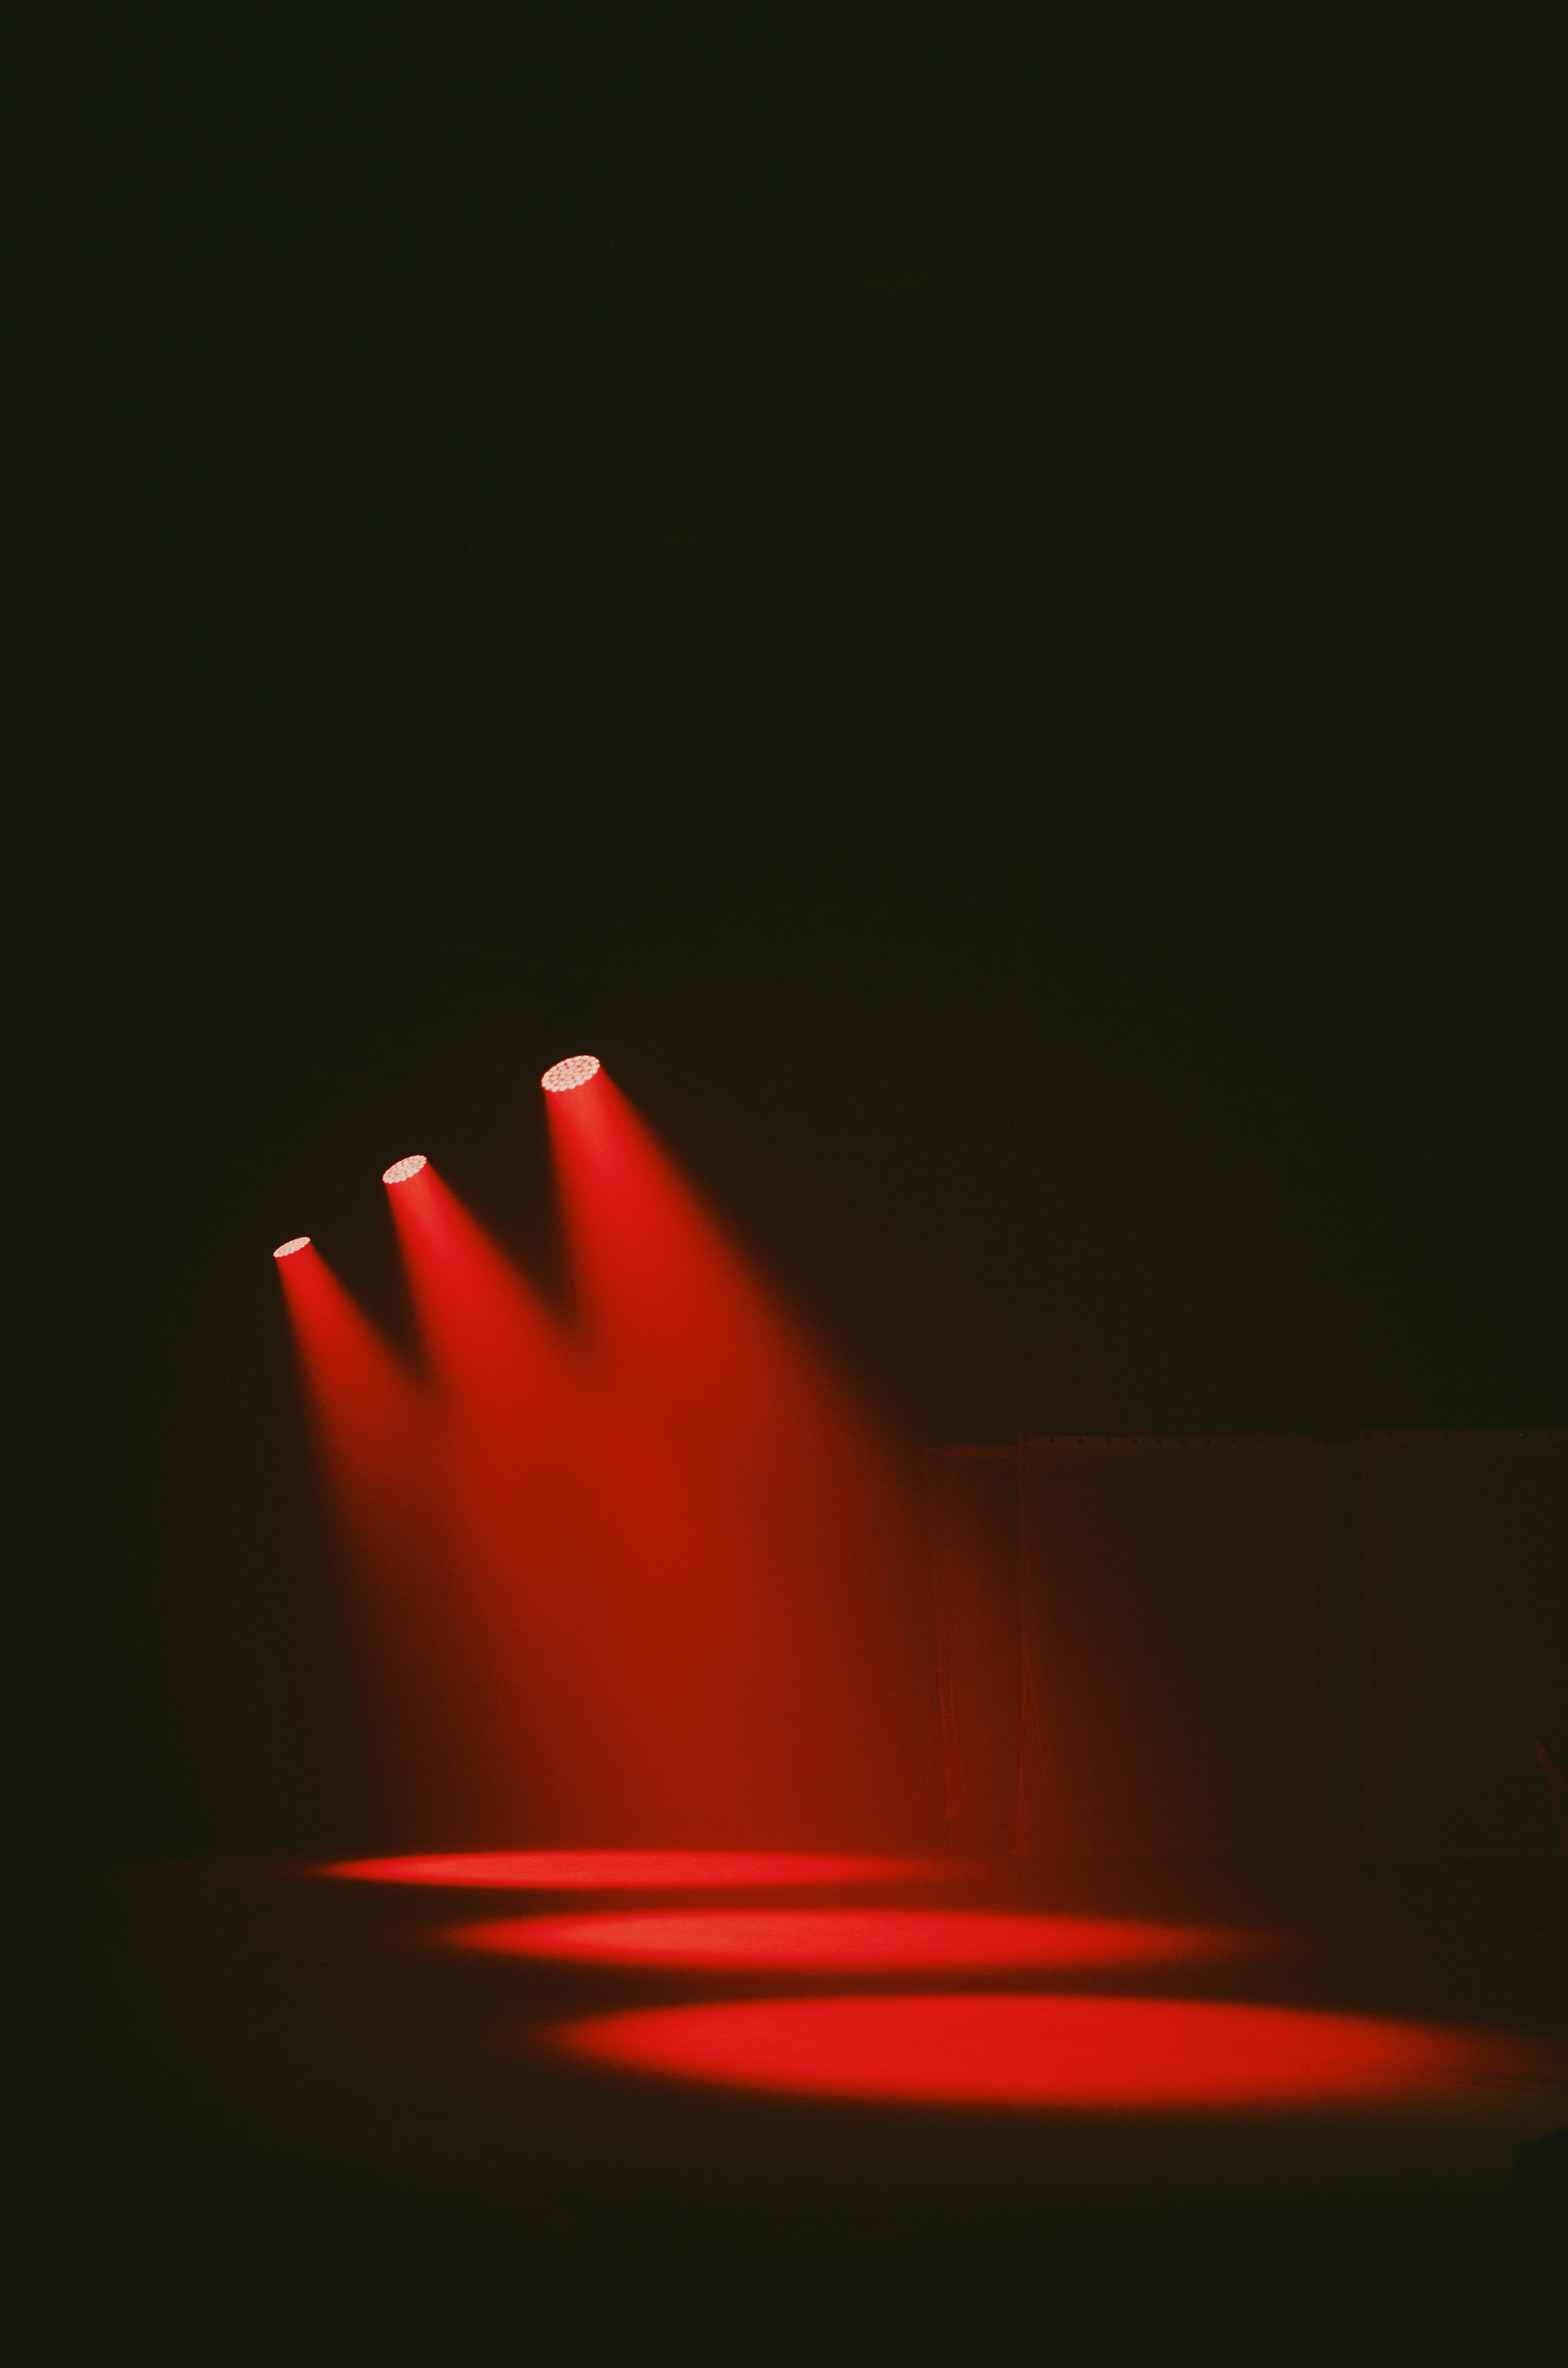 hale Hurtig Kig forbi Red Lights on a Stage · Free Stock Photo